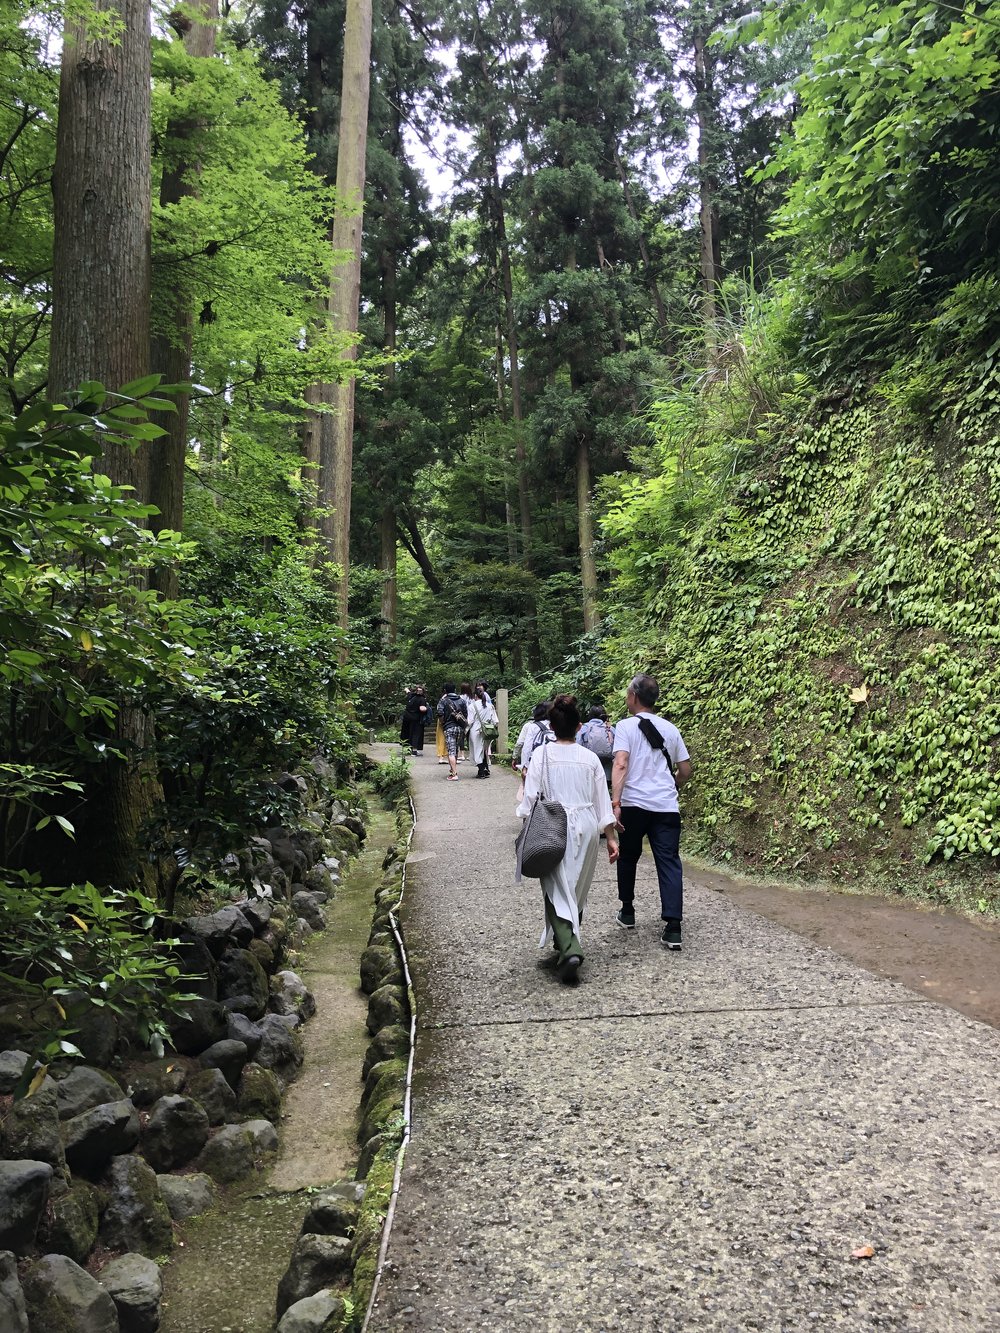 Graveyard path on the Daibutsu Trail